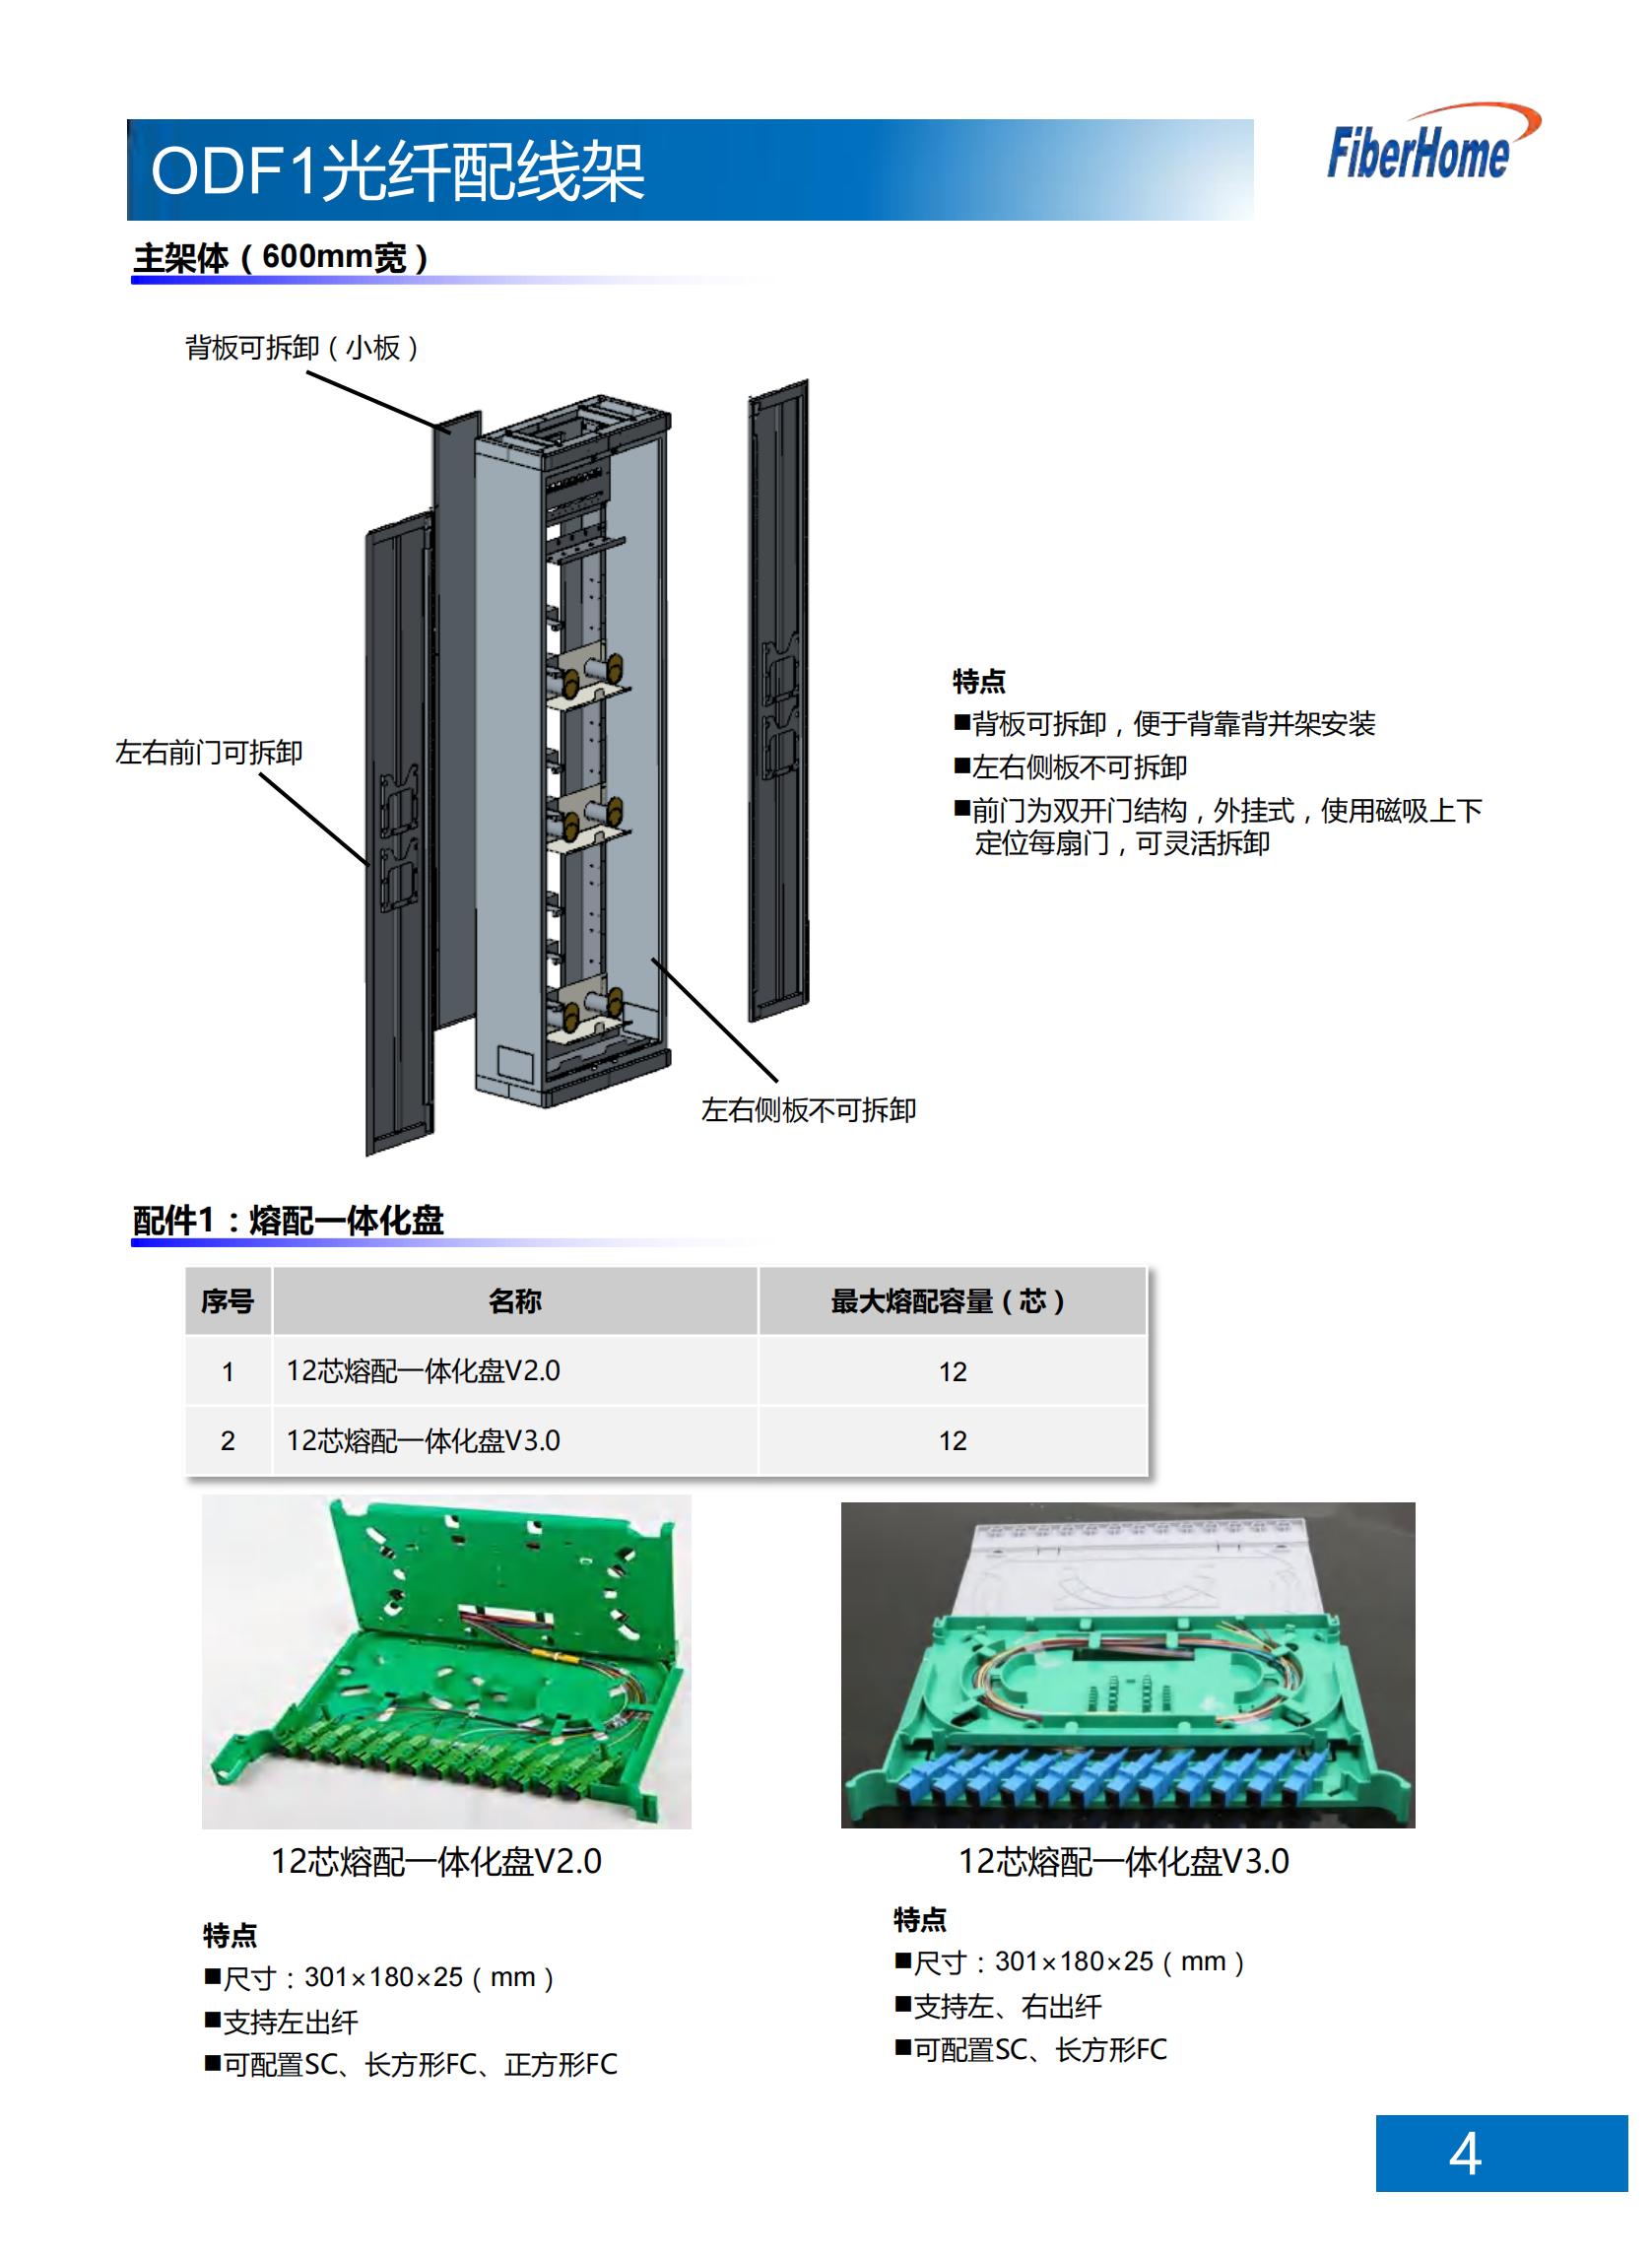 ODF101-144-A7 ODF光纤配线架 （144芯璧挂式 无子框型 不带熔纤盘）